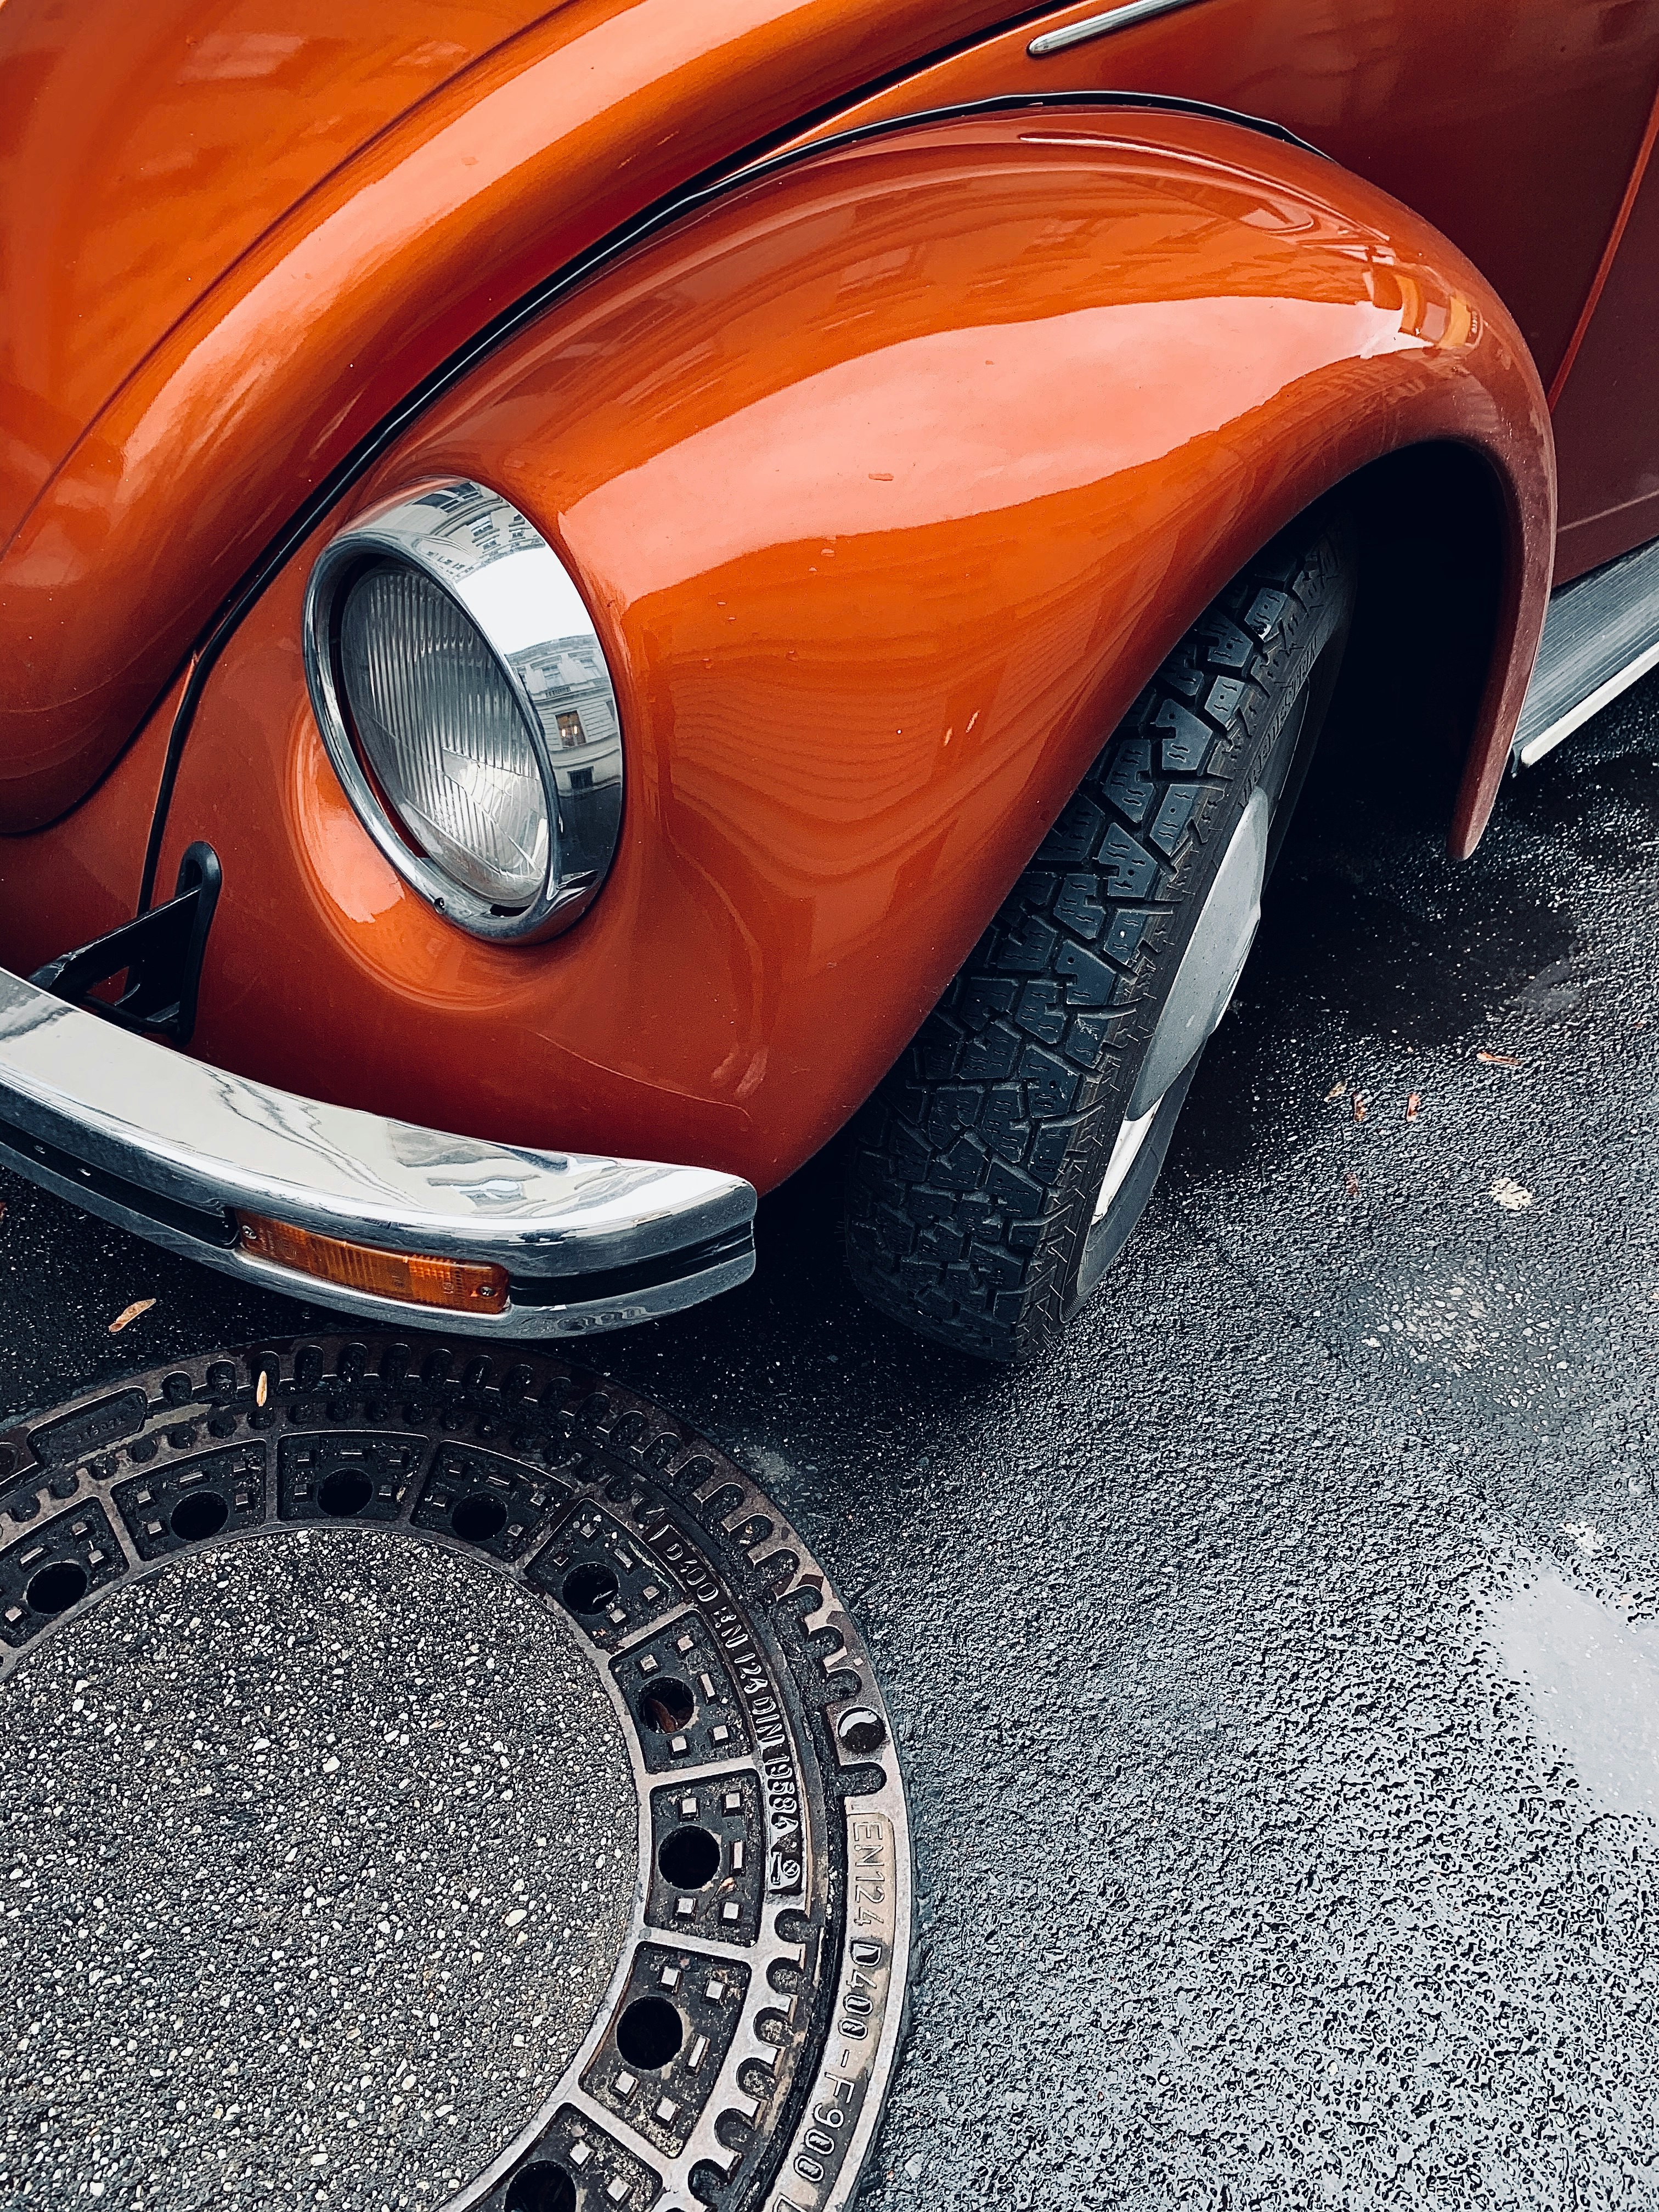 orange car on gray asphalt road